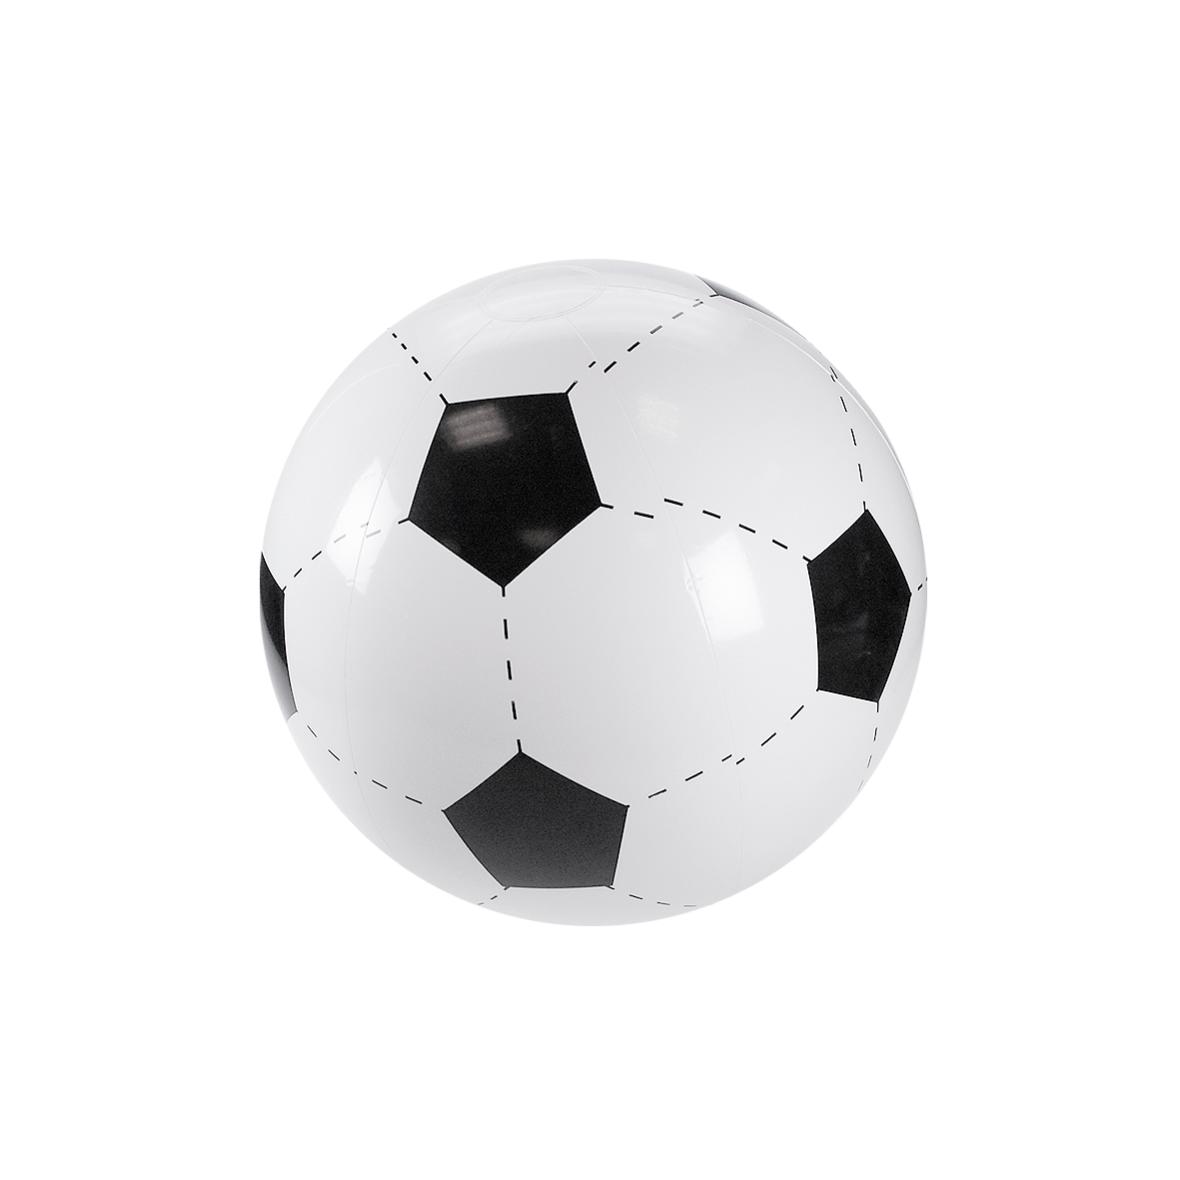 Ballon de plage personnalisé typé football - Liham - Zaprinta France